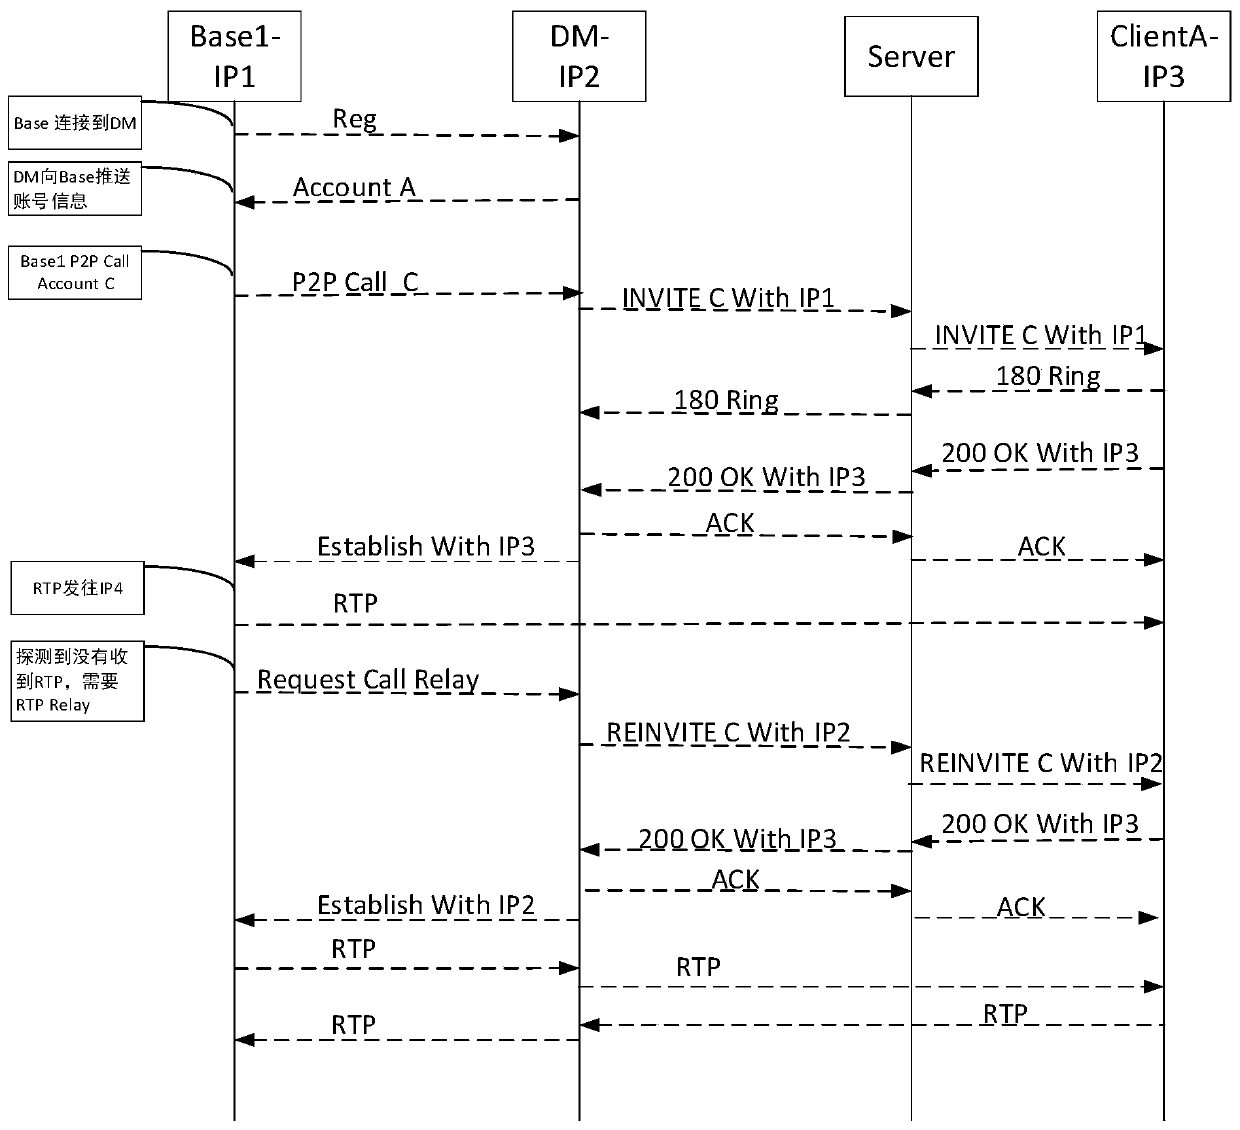 Media interaction method under DECT network cluster